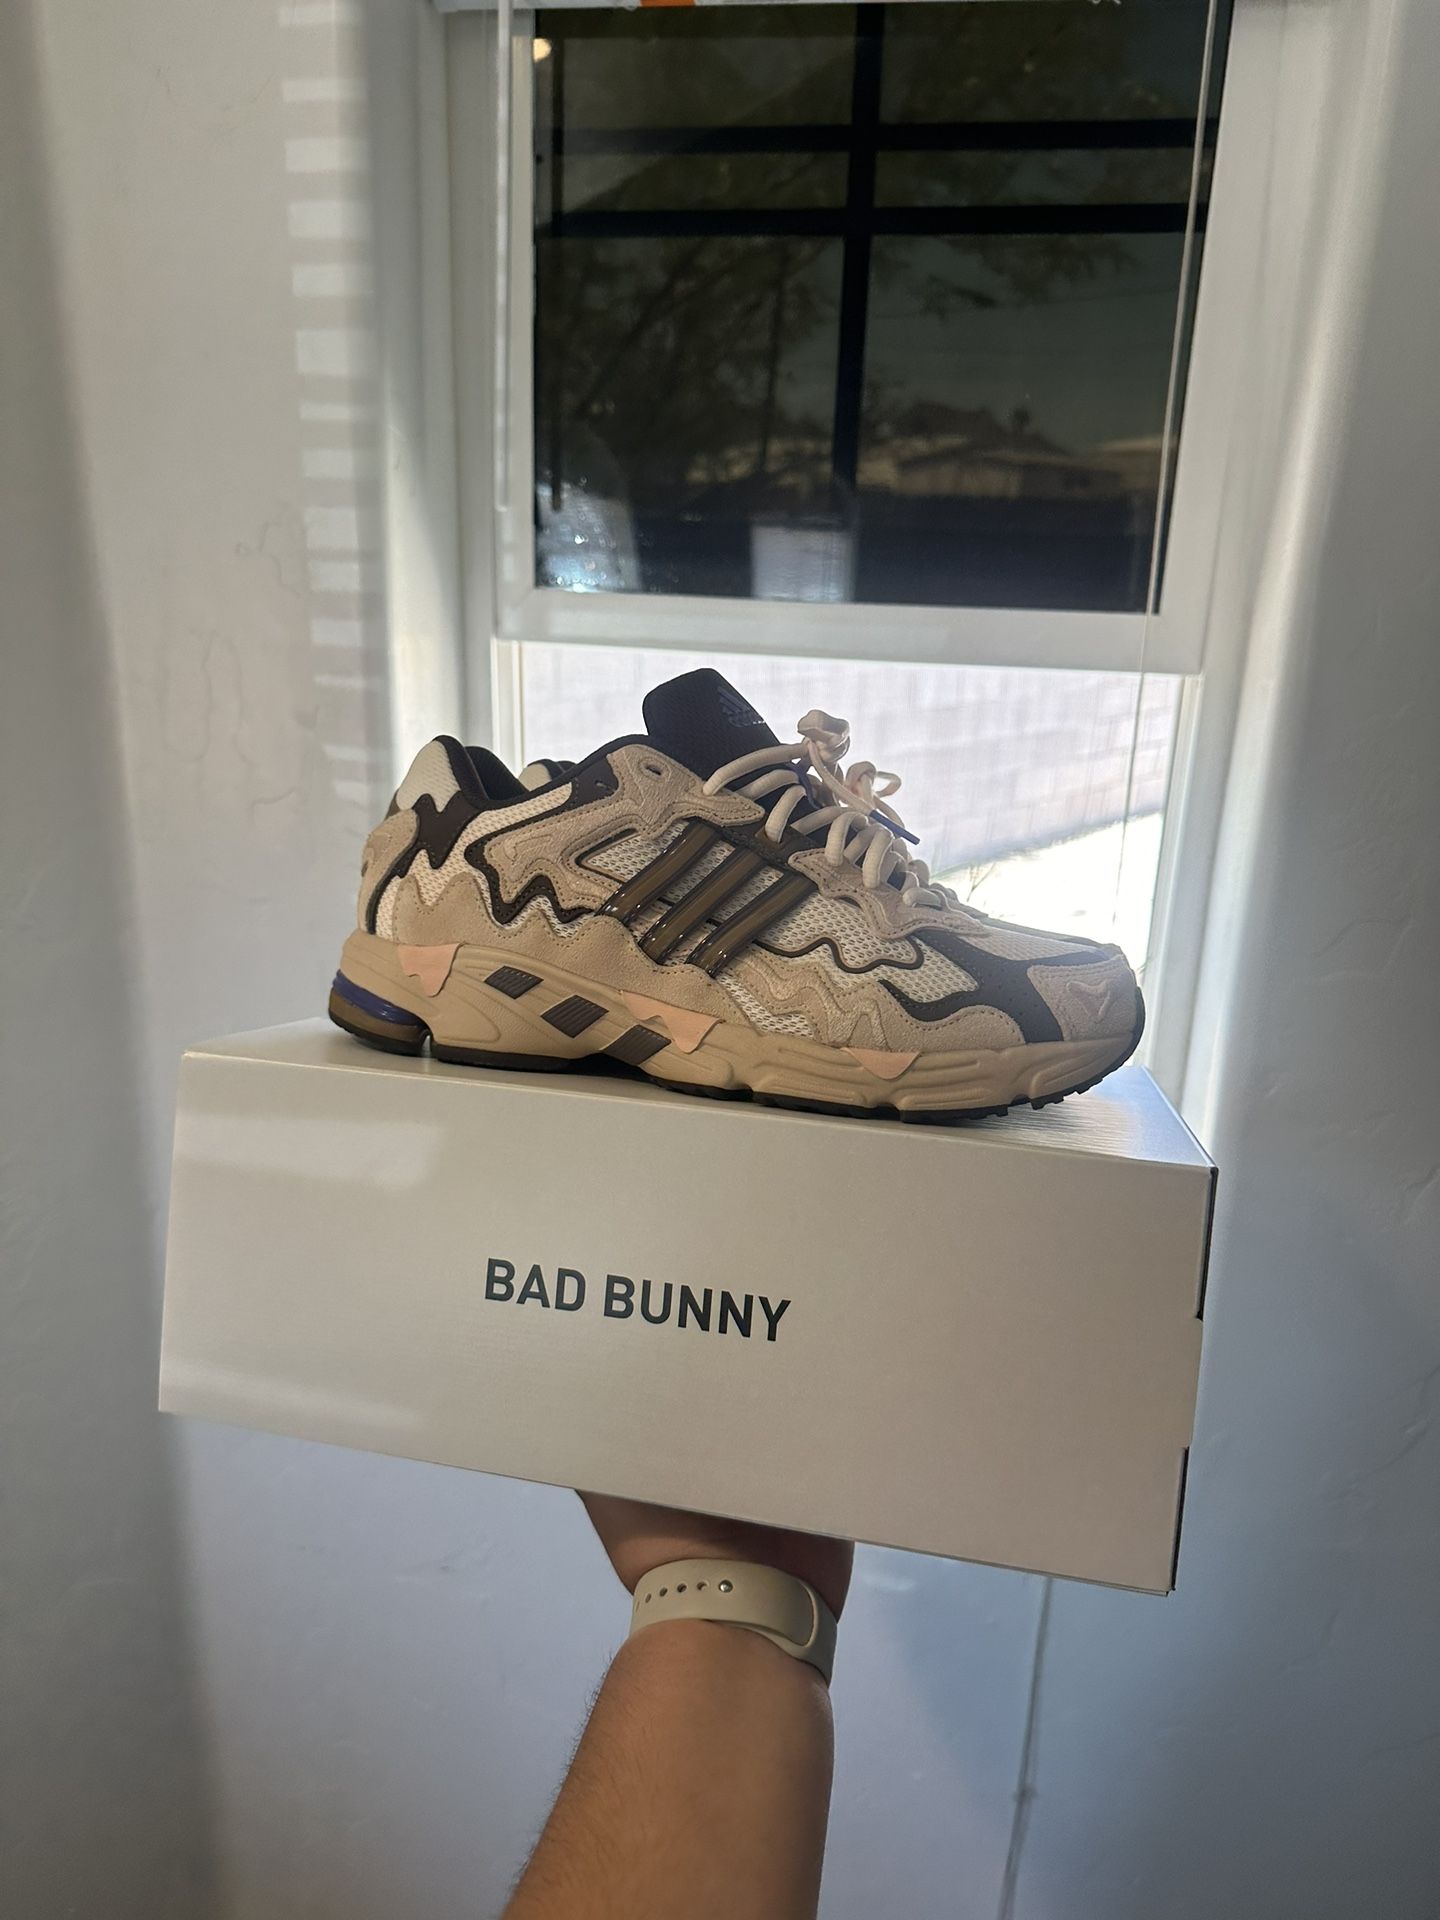 Adidas x Bad Bunny “Paso Fino” (SZ 9.5)